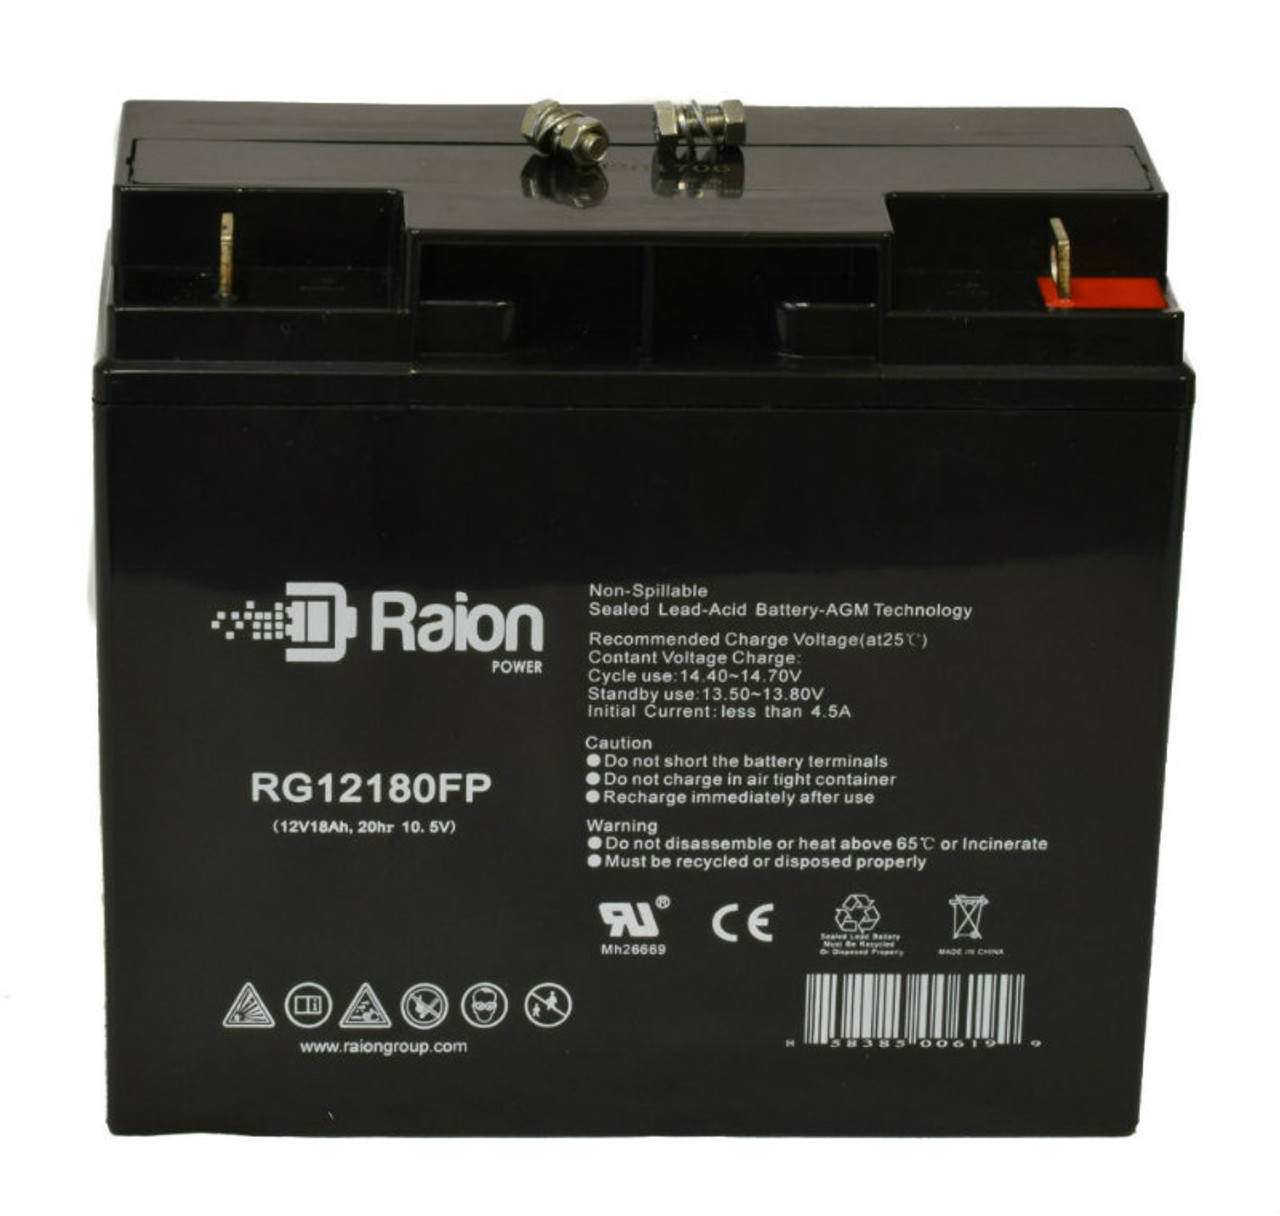 Raion Power RG12180FP 12V 18Ah Lead Acid Battery for Daymak Daytona